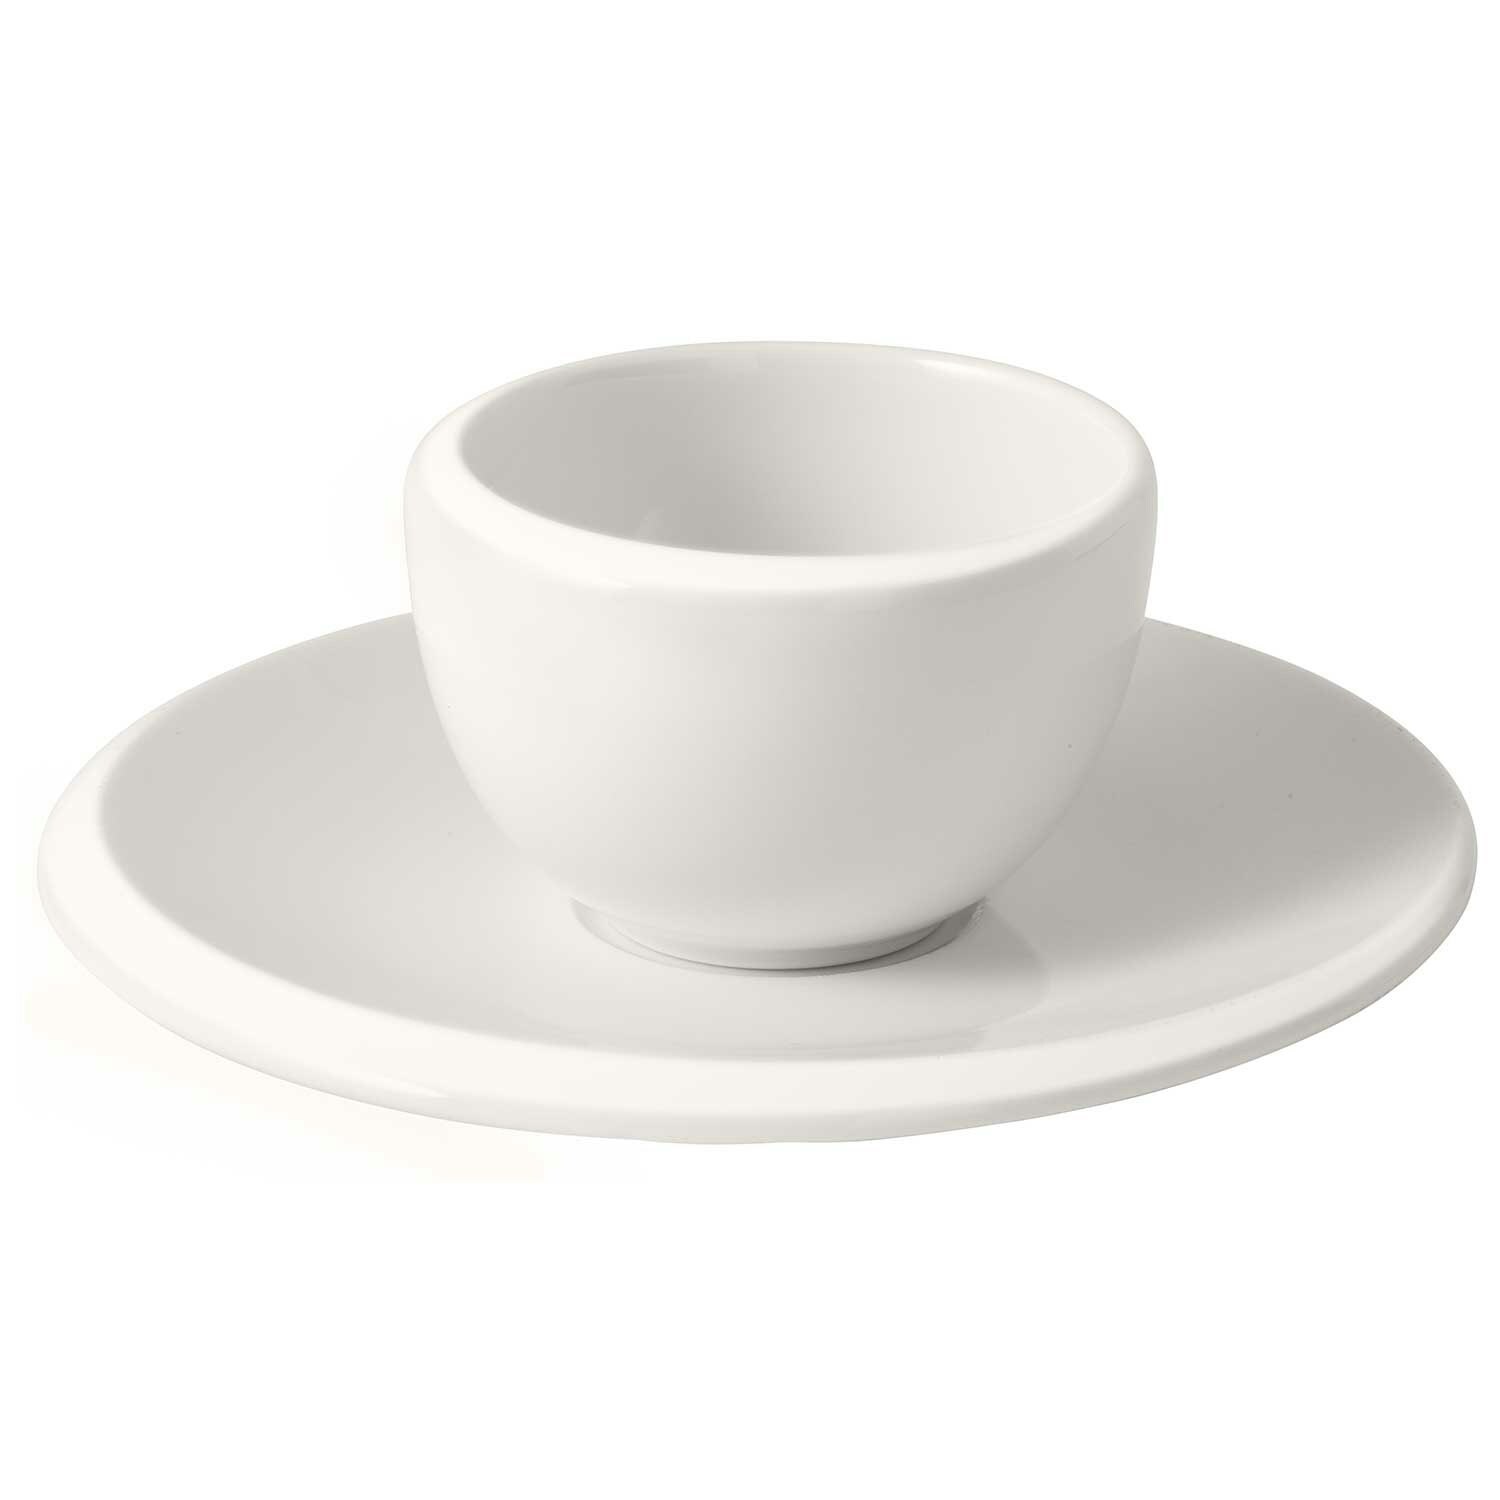 https://royaldesign.com/image/2/villeroy-boch-newmoon-espresso-cup-saucer-10-cl-0